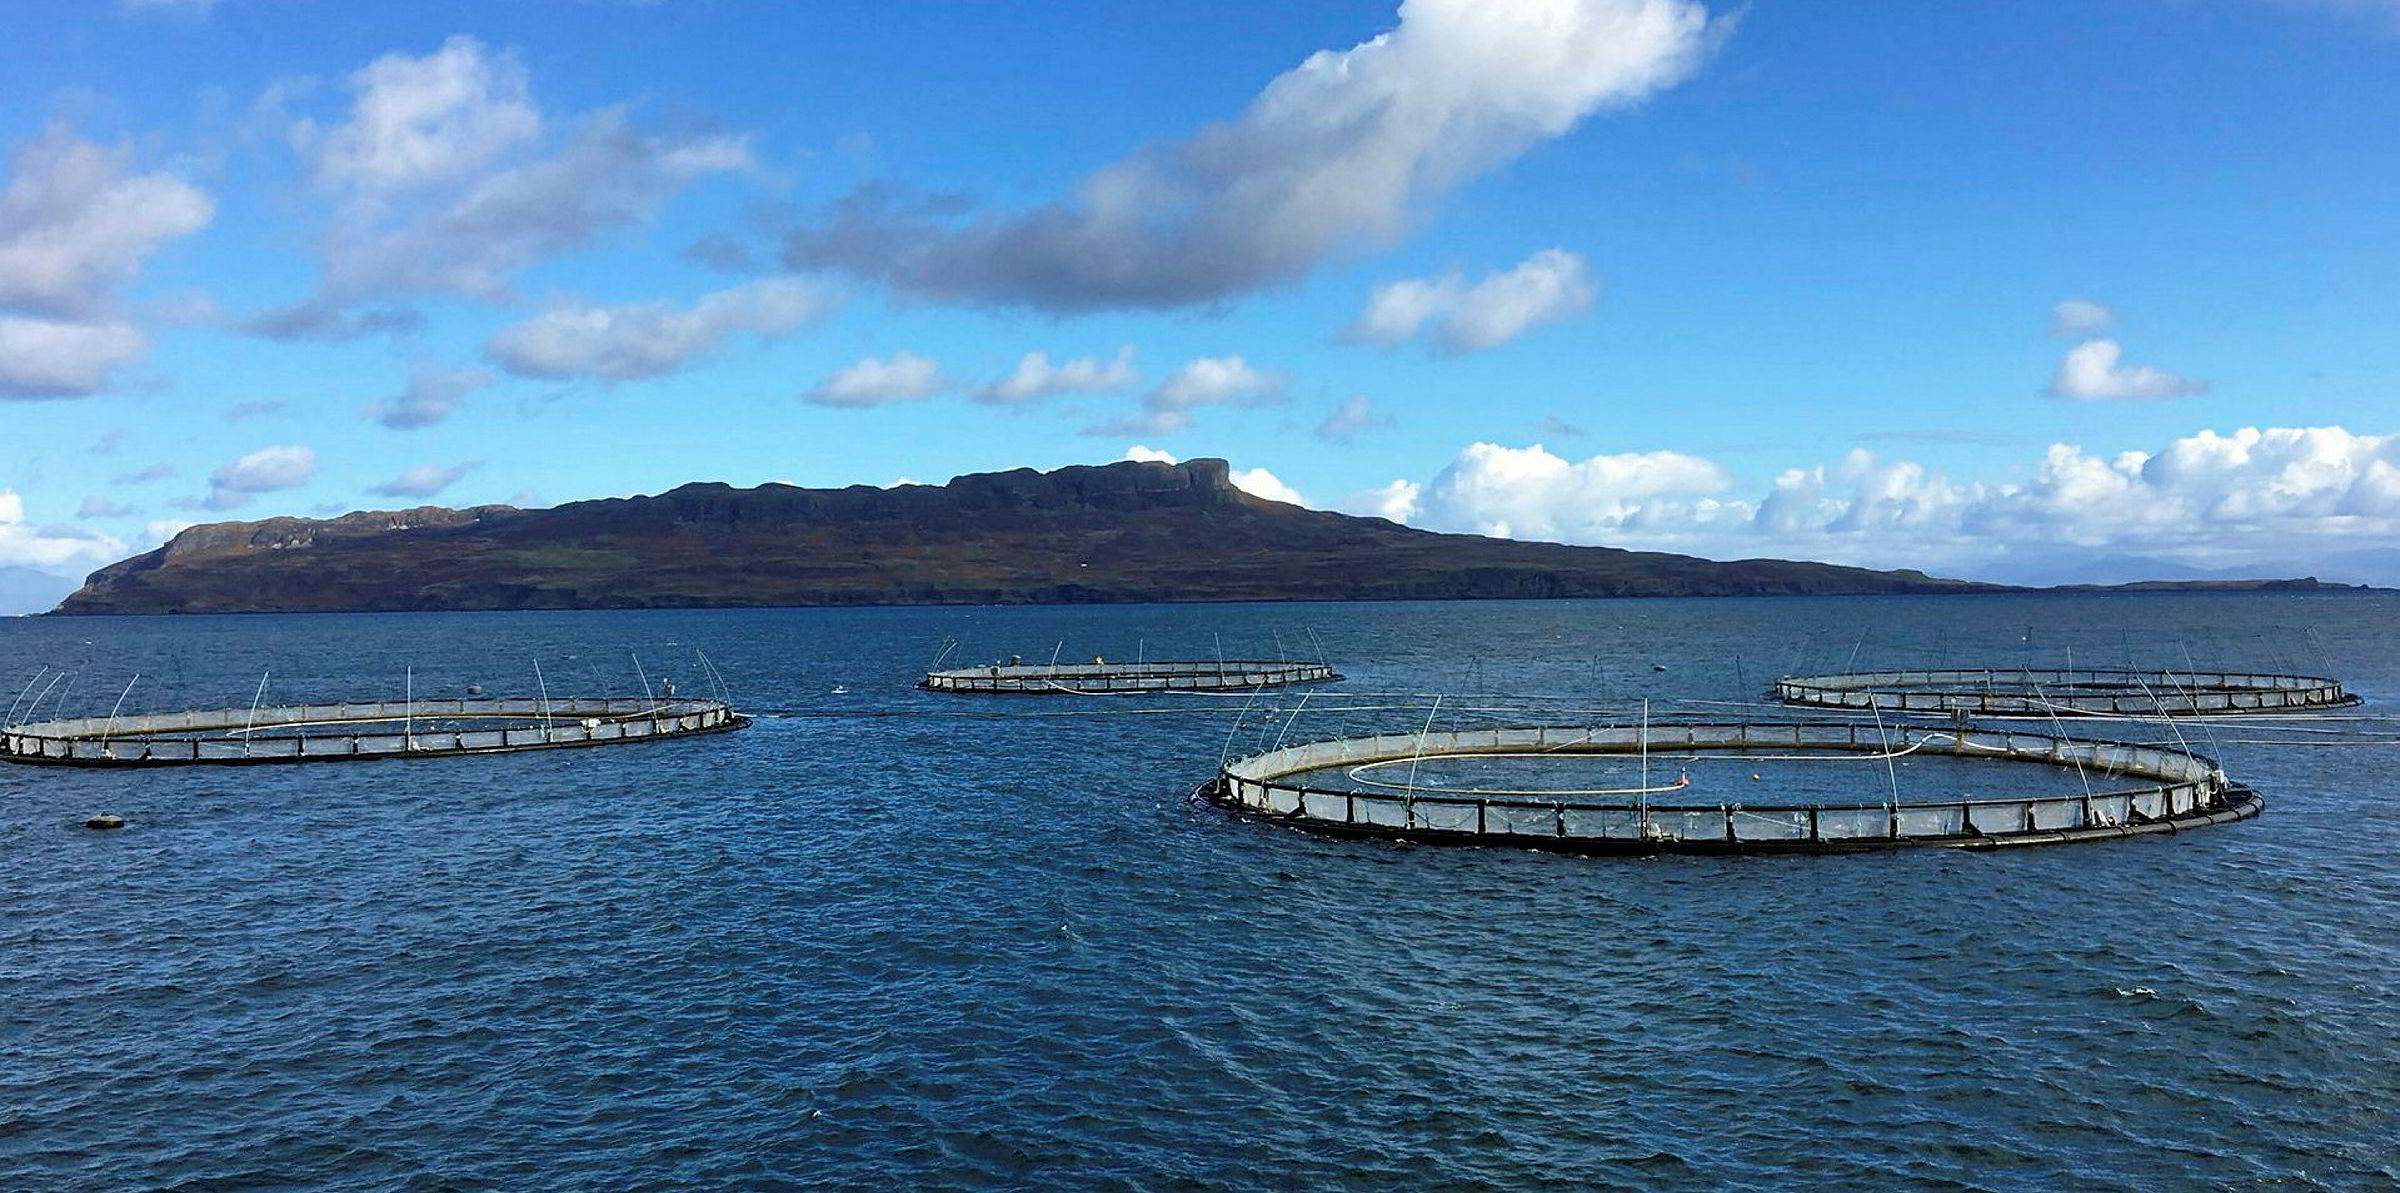 Shockingly huge' steelhead salmon escape fish farm, threatening